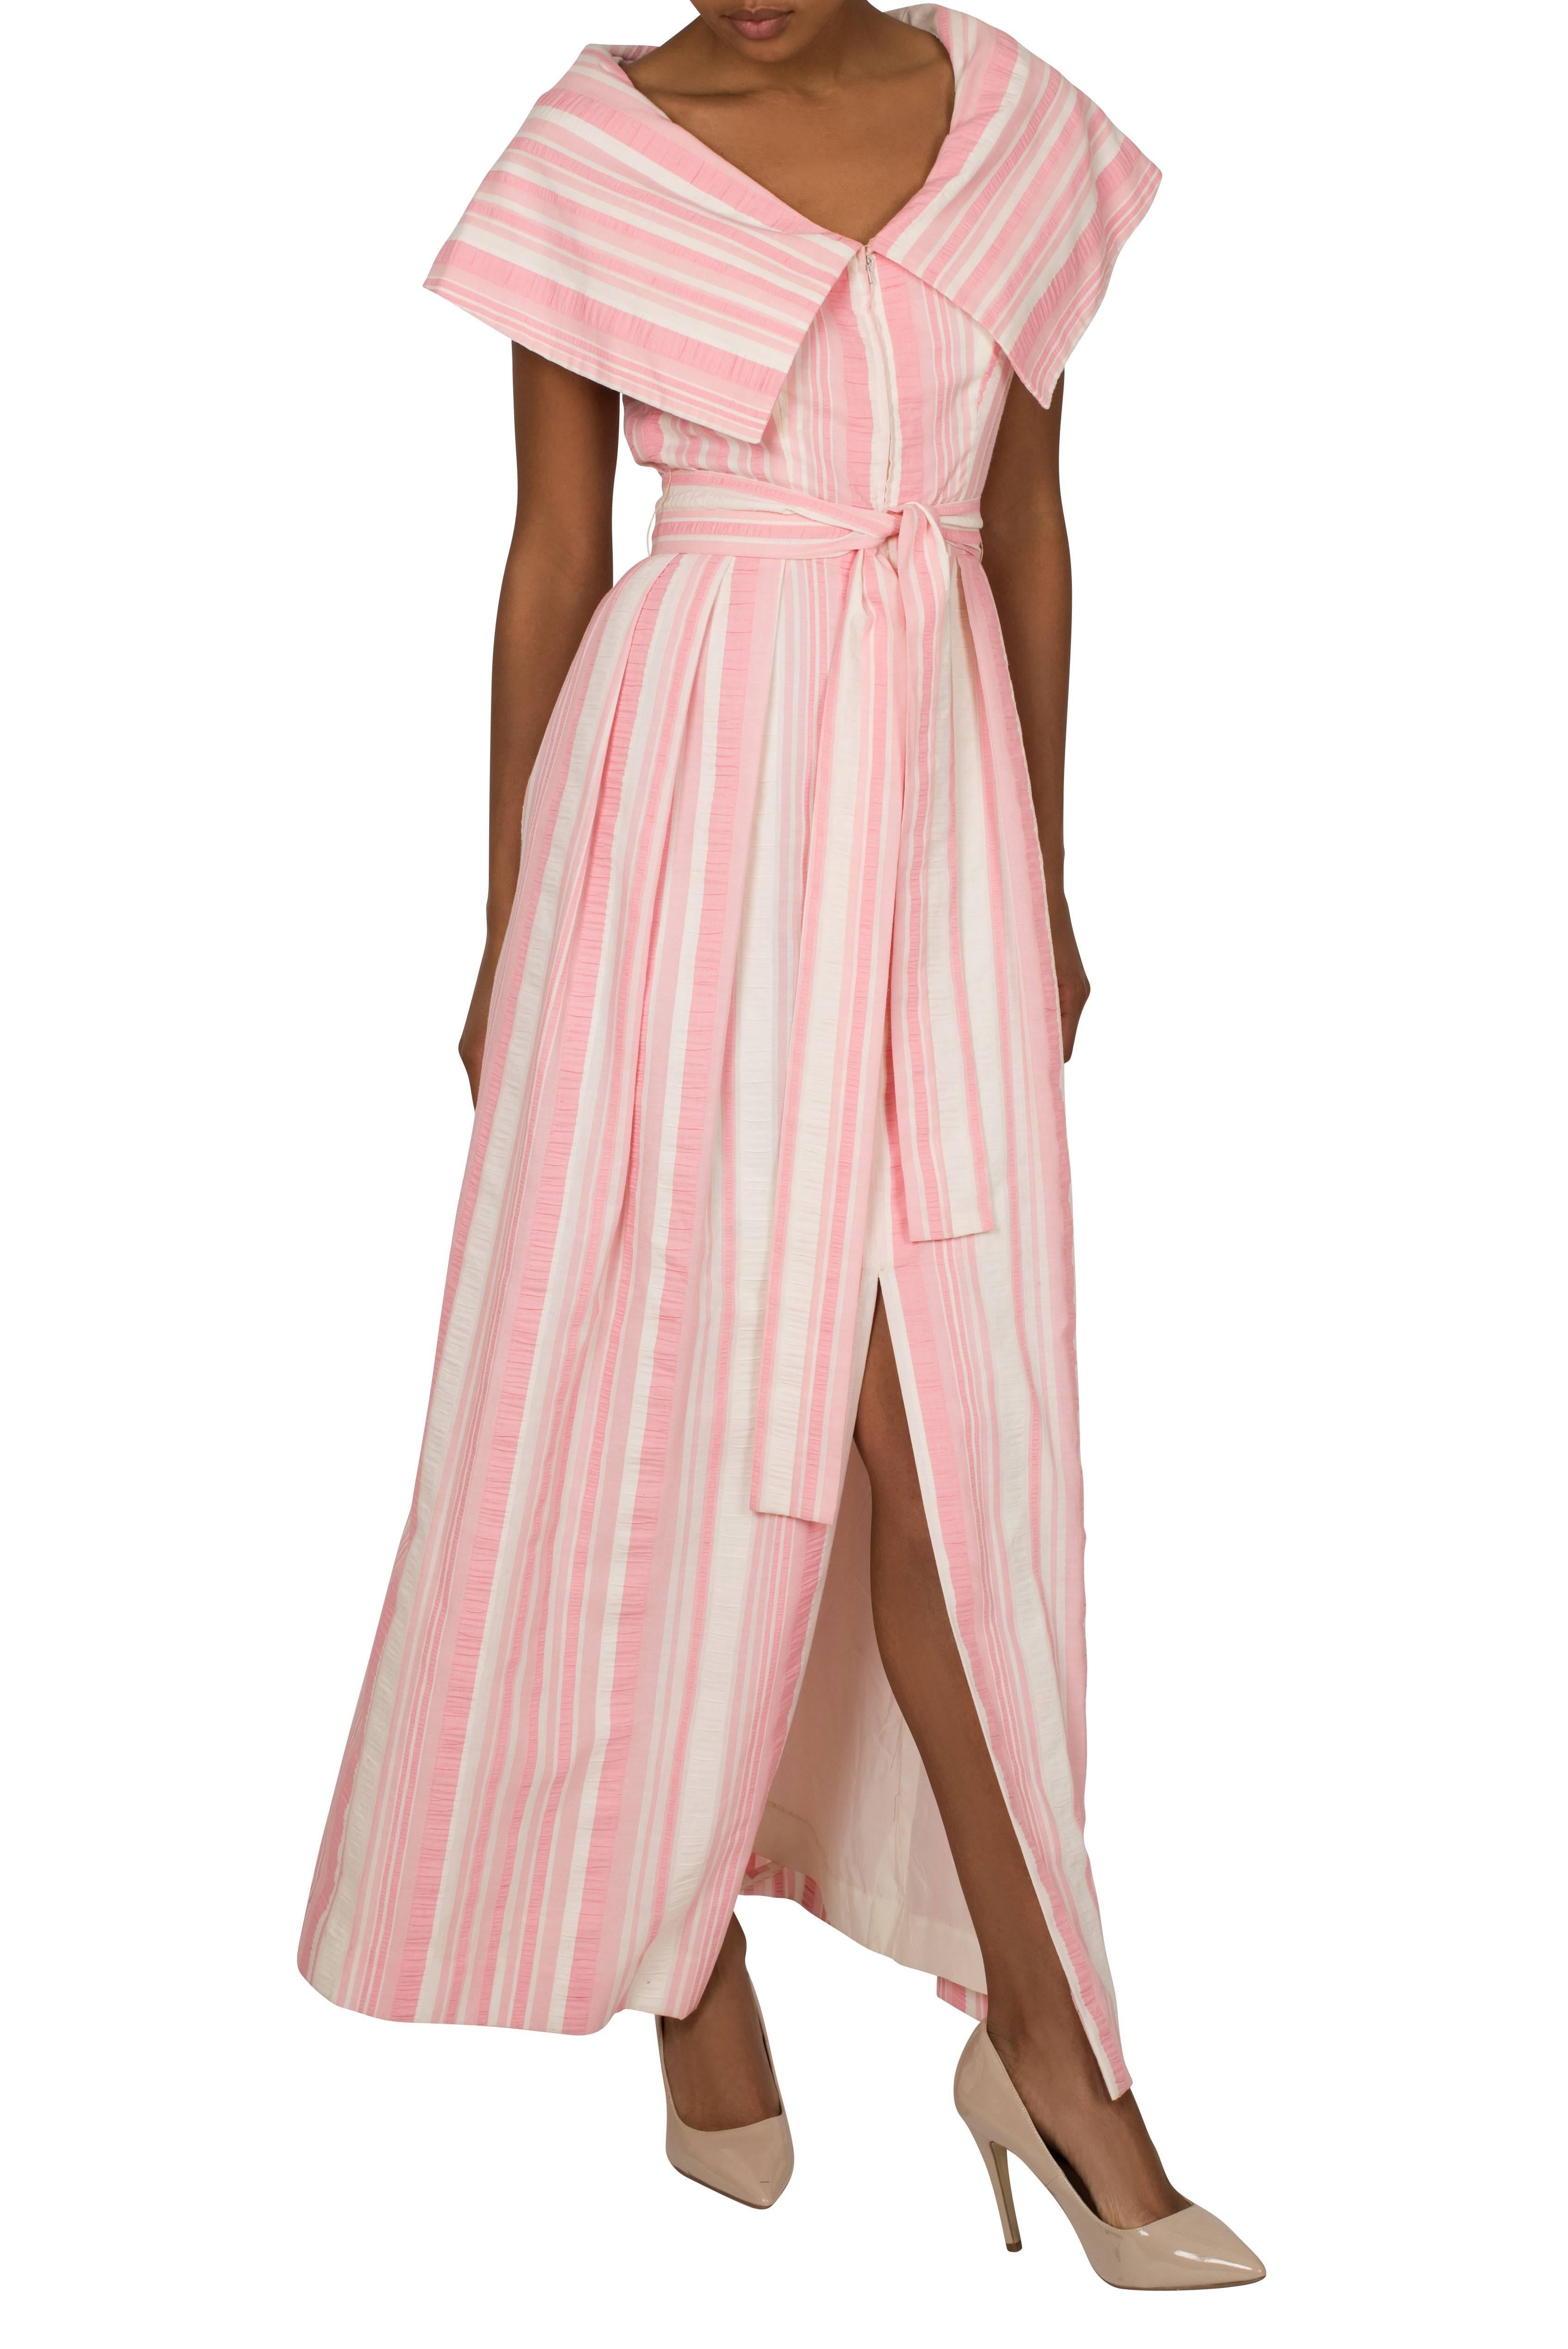 Beige 1970s Estevez Seersucker Pink and Ivory Candy Stripe Dress Size S For Sale